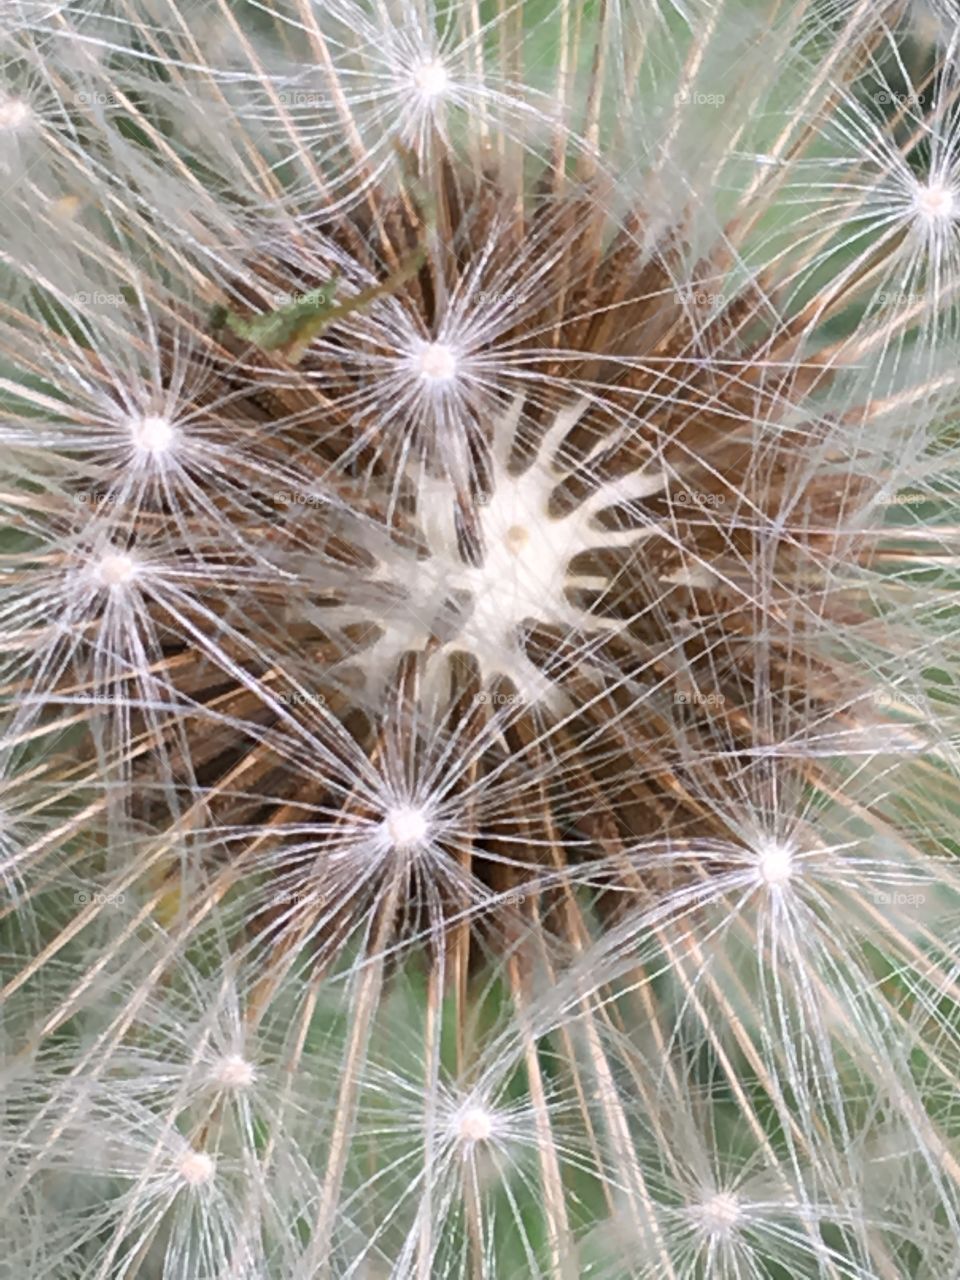 Dandelion seed parachutes - close up 